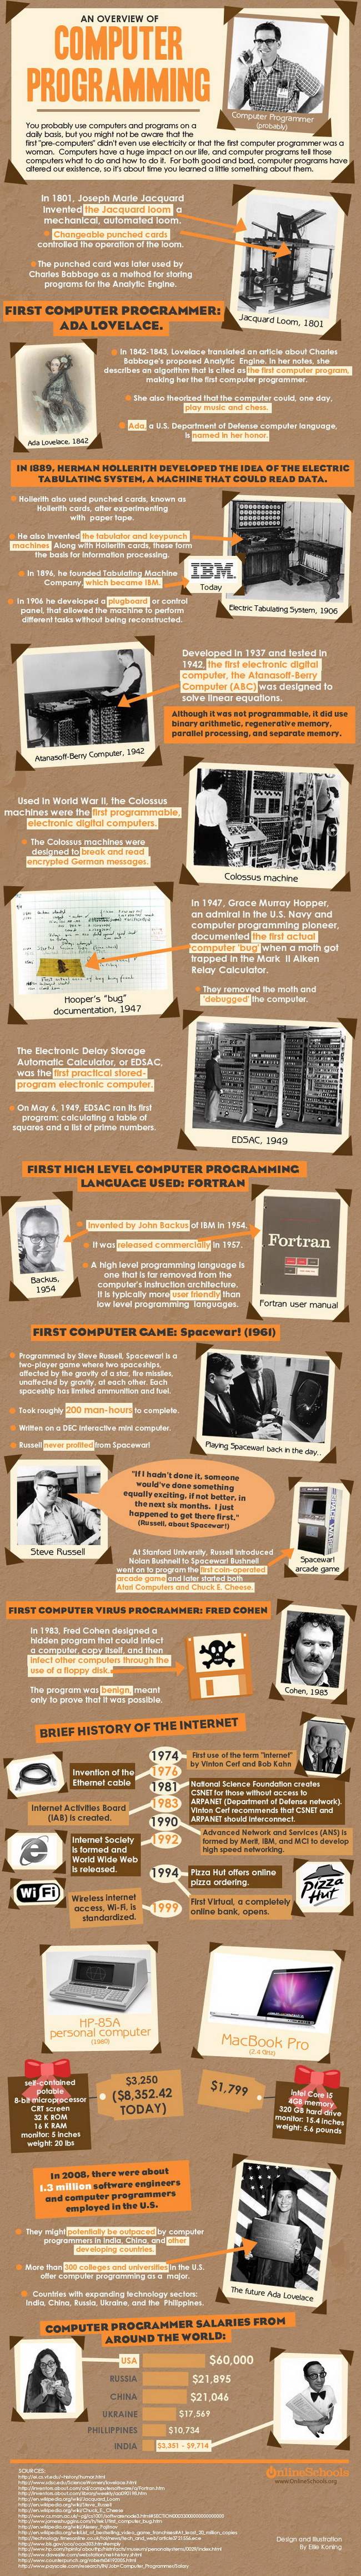 computer_programming_facts.jpg